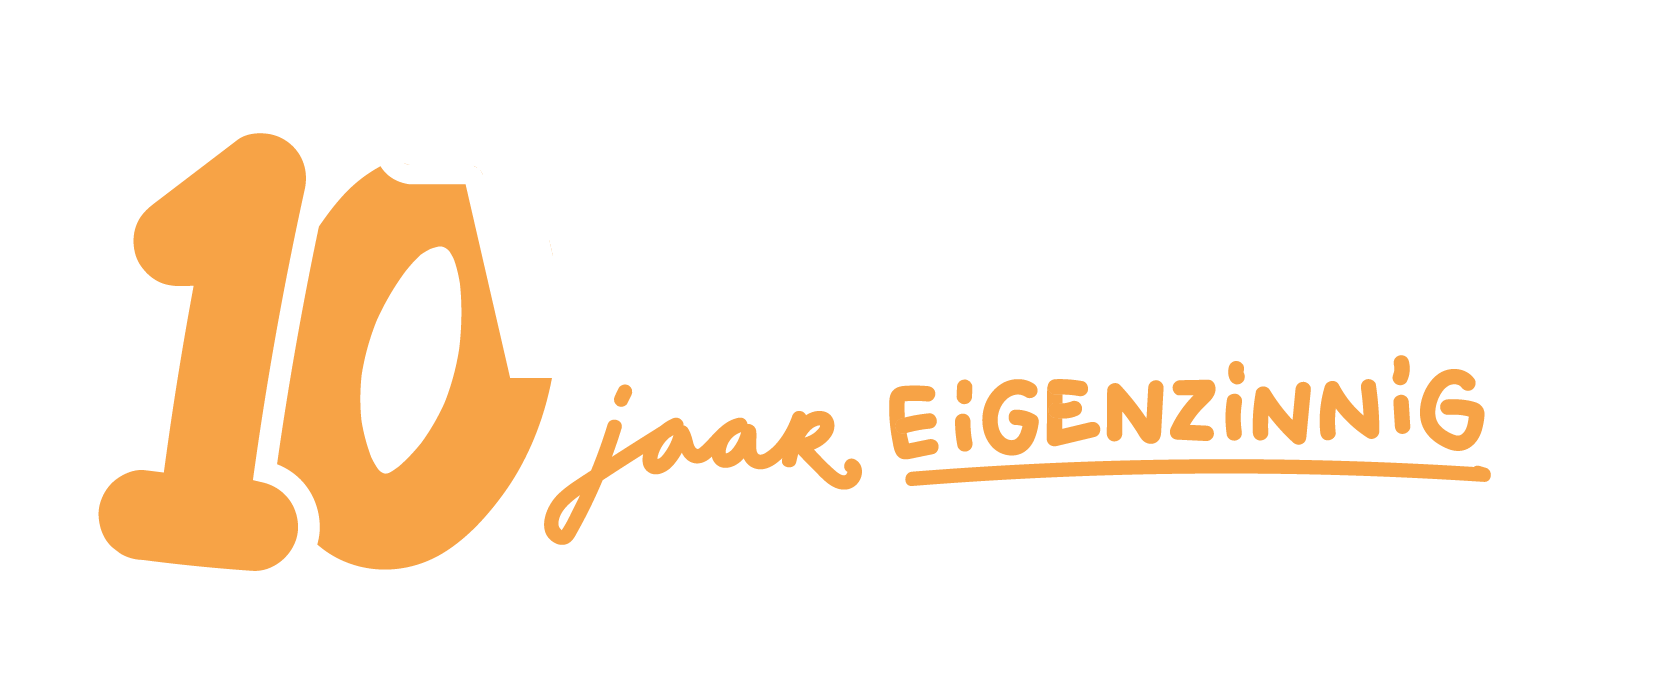 Thomas More Hogeschool 10 jaar eigenzinnig